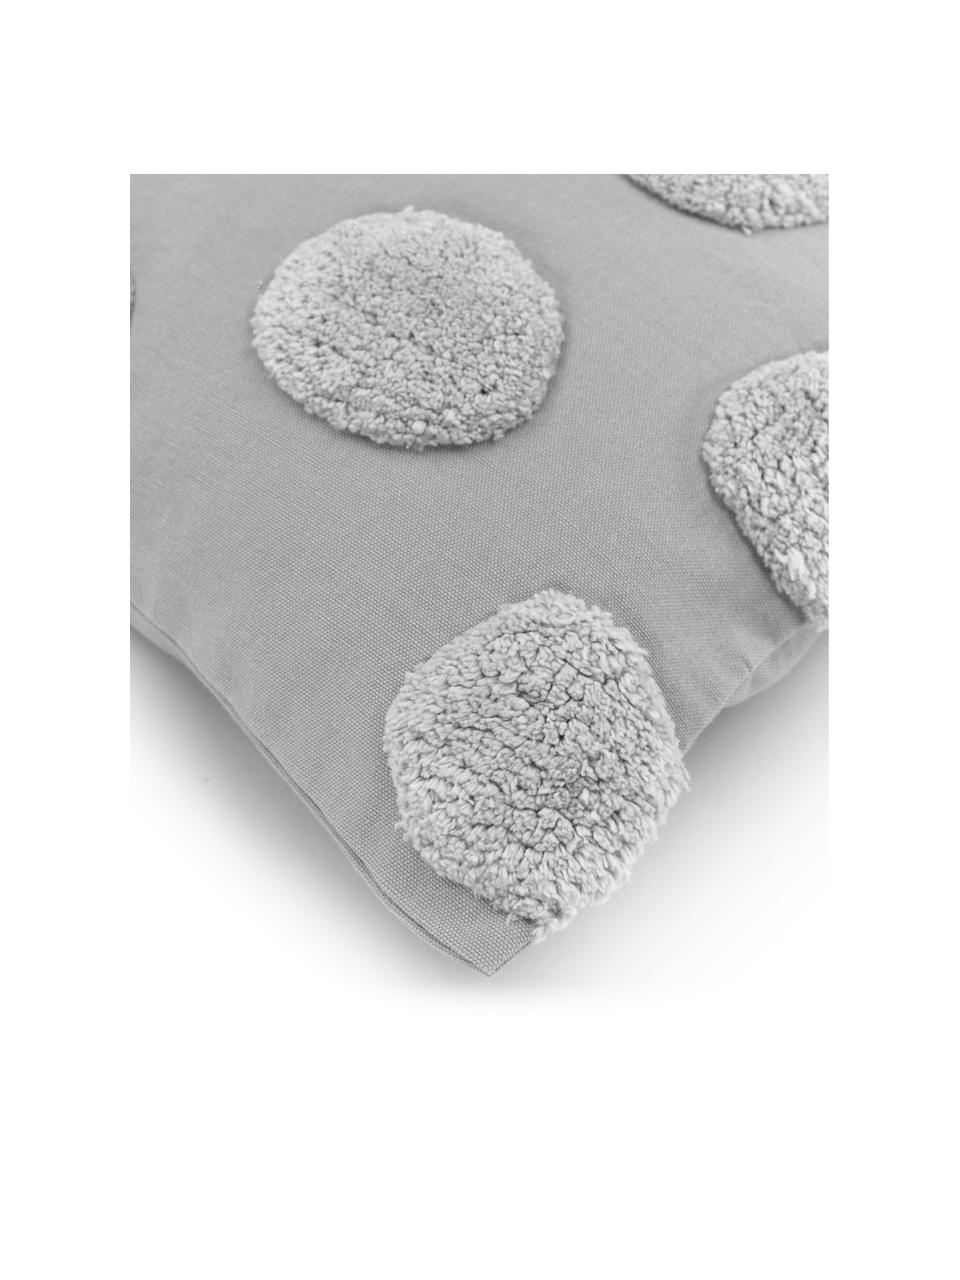 Kissenhülle Rowen mit getuftetem Muster, 100% Baumwolle, Grau, 50 x 50 cm